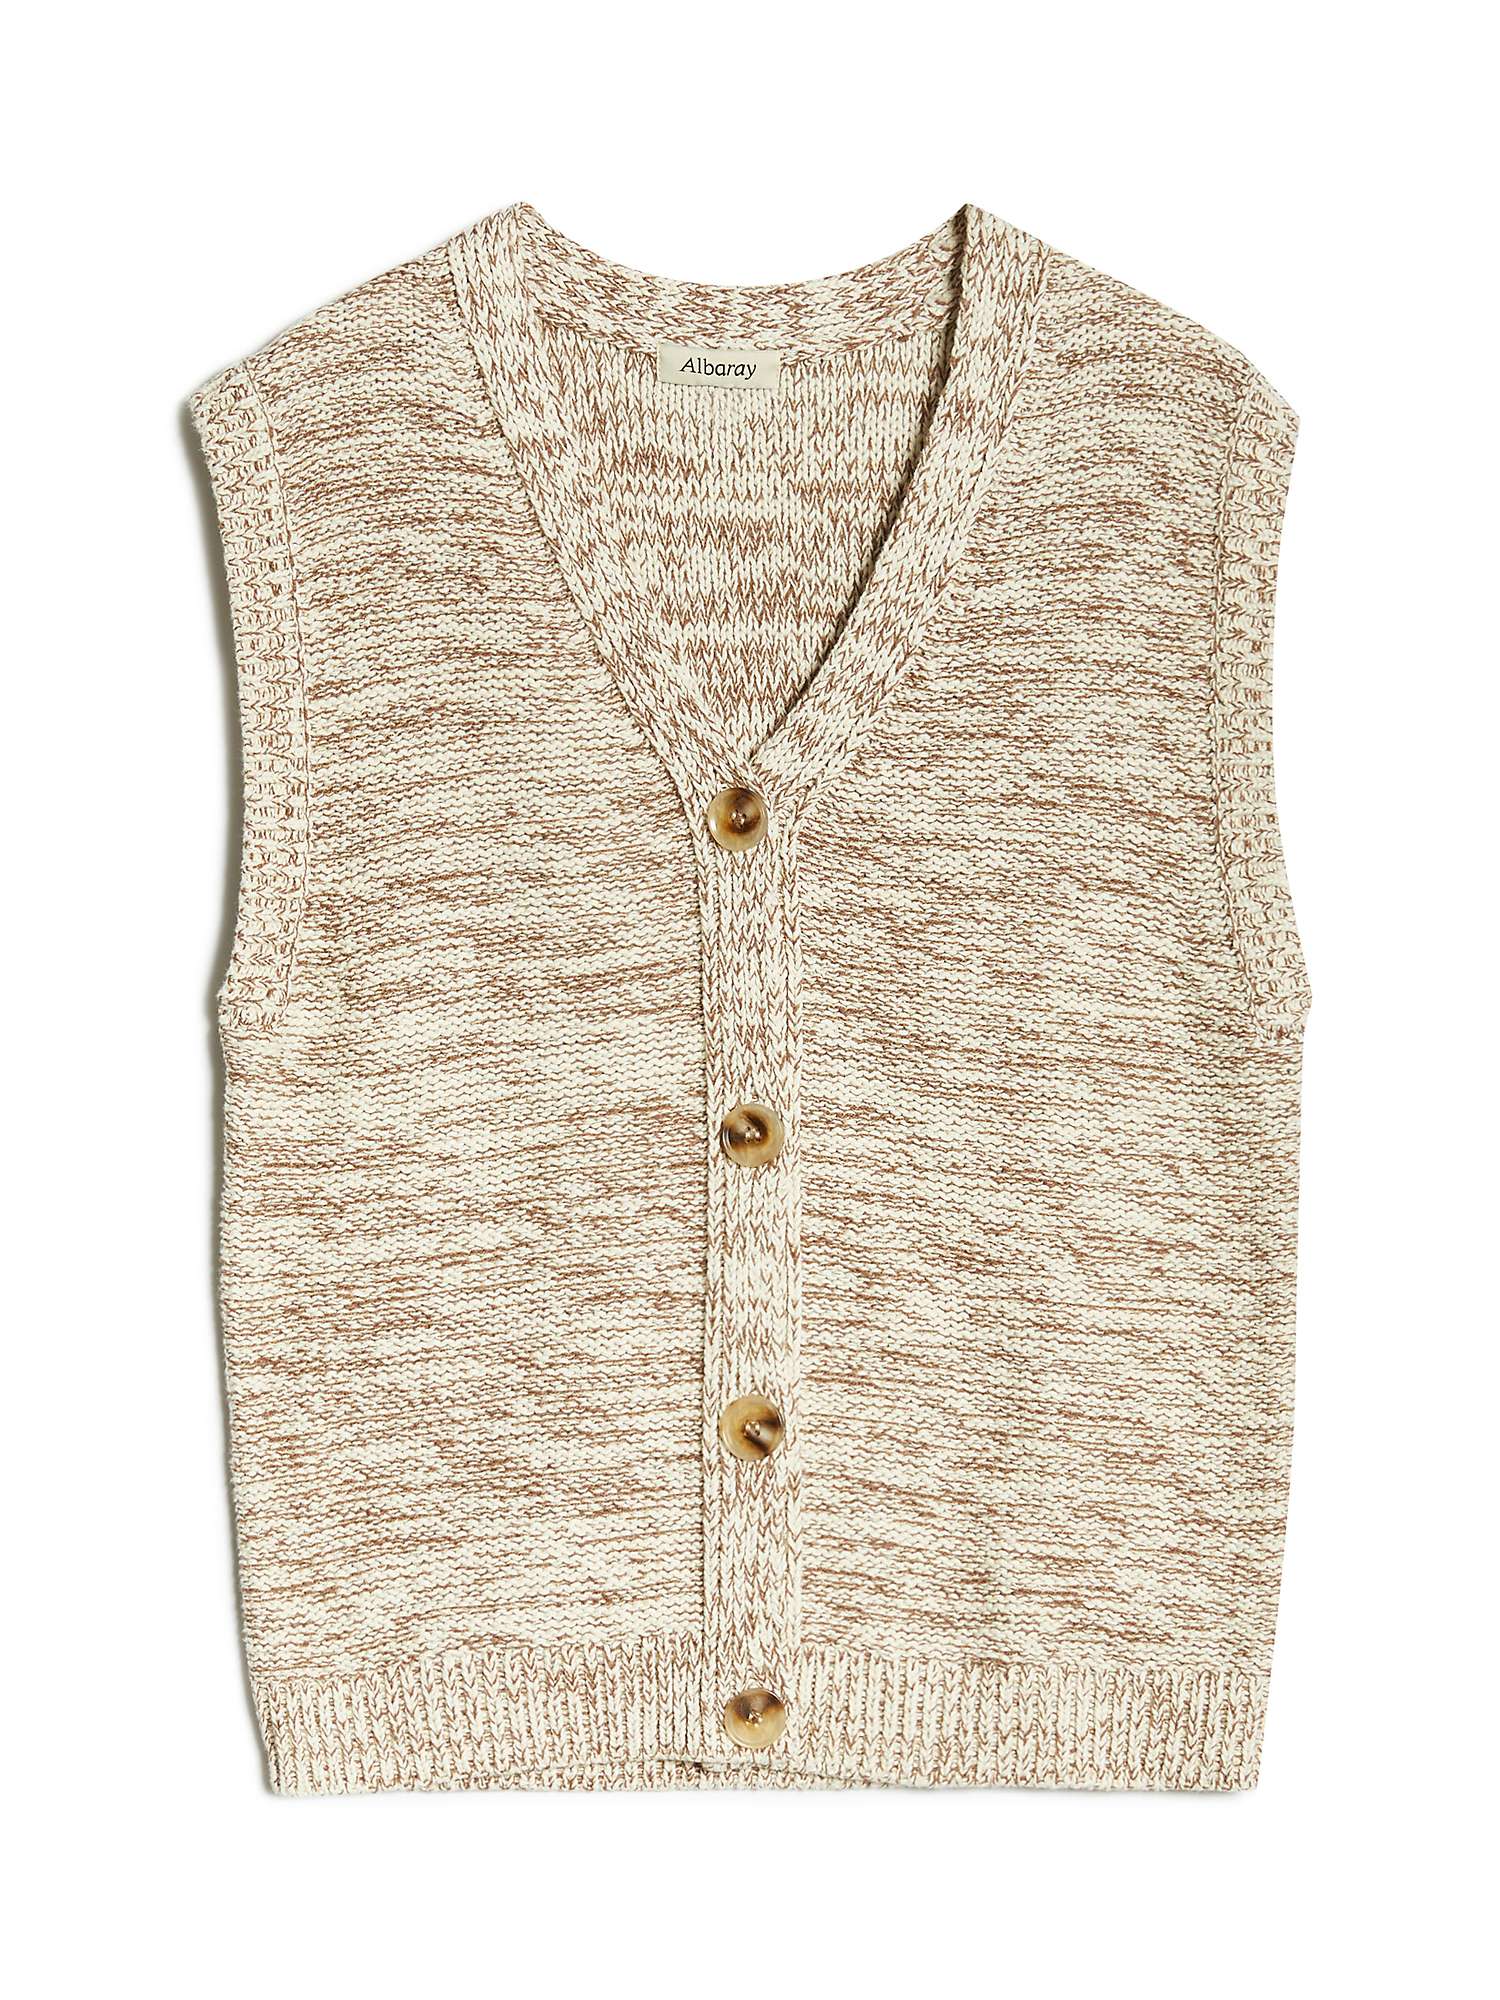 Buy Albaray Tweed Knitted Waistcoat, Brown Online at johnlewis.com